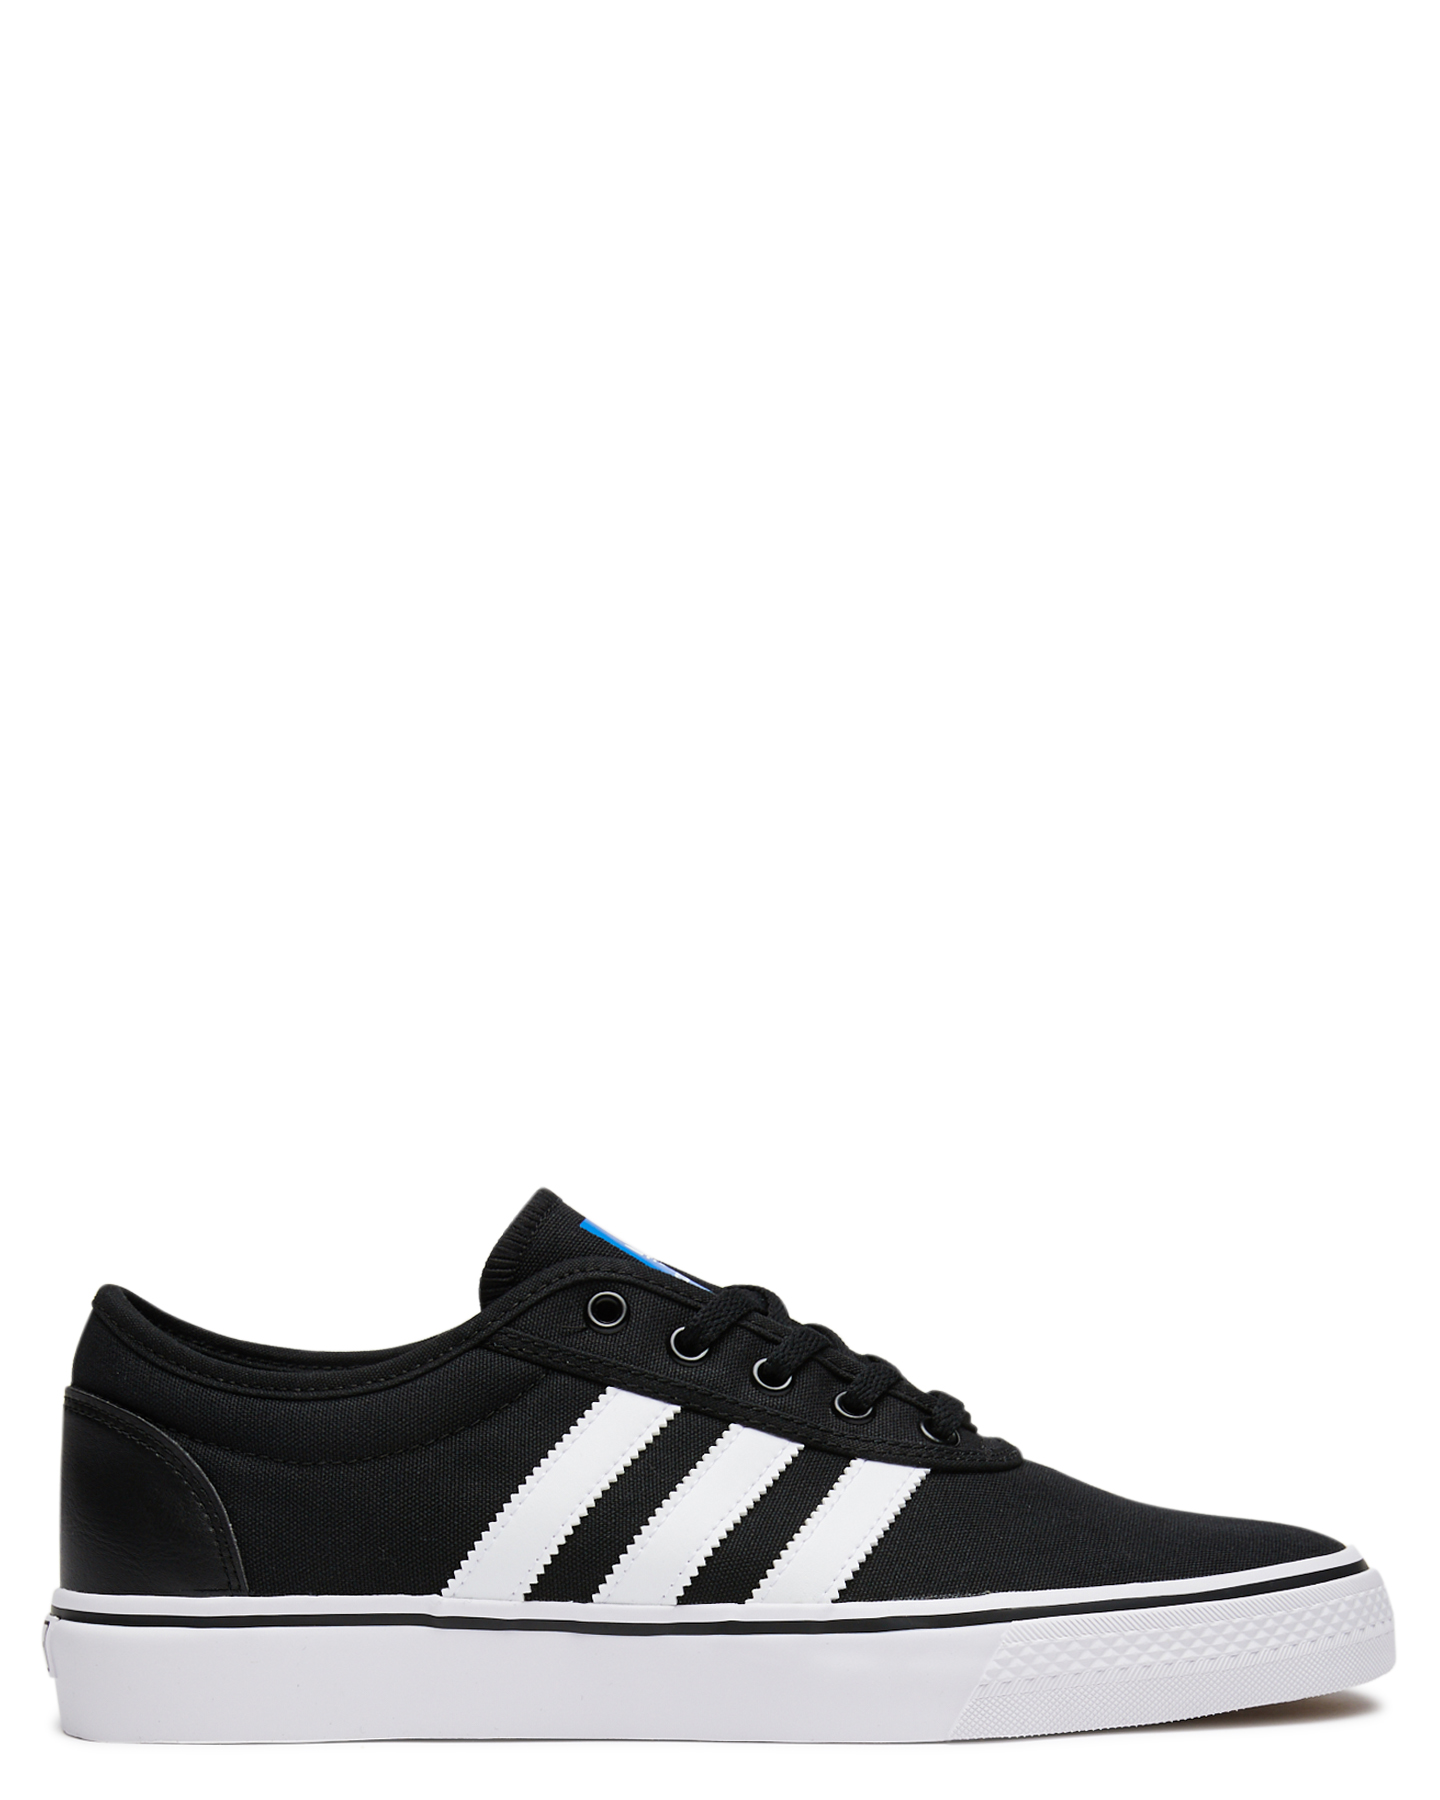 Adidas Mens Adi Ease Shoe - Black 